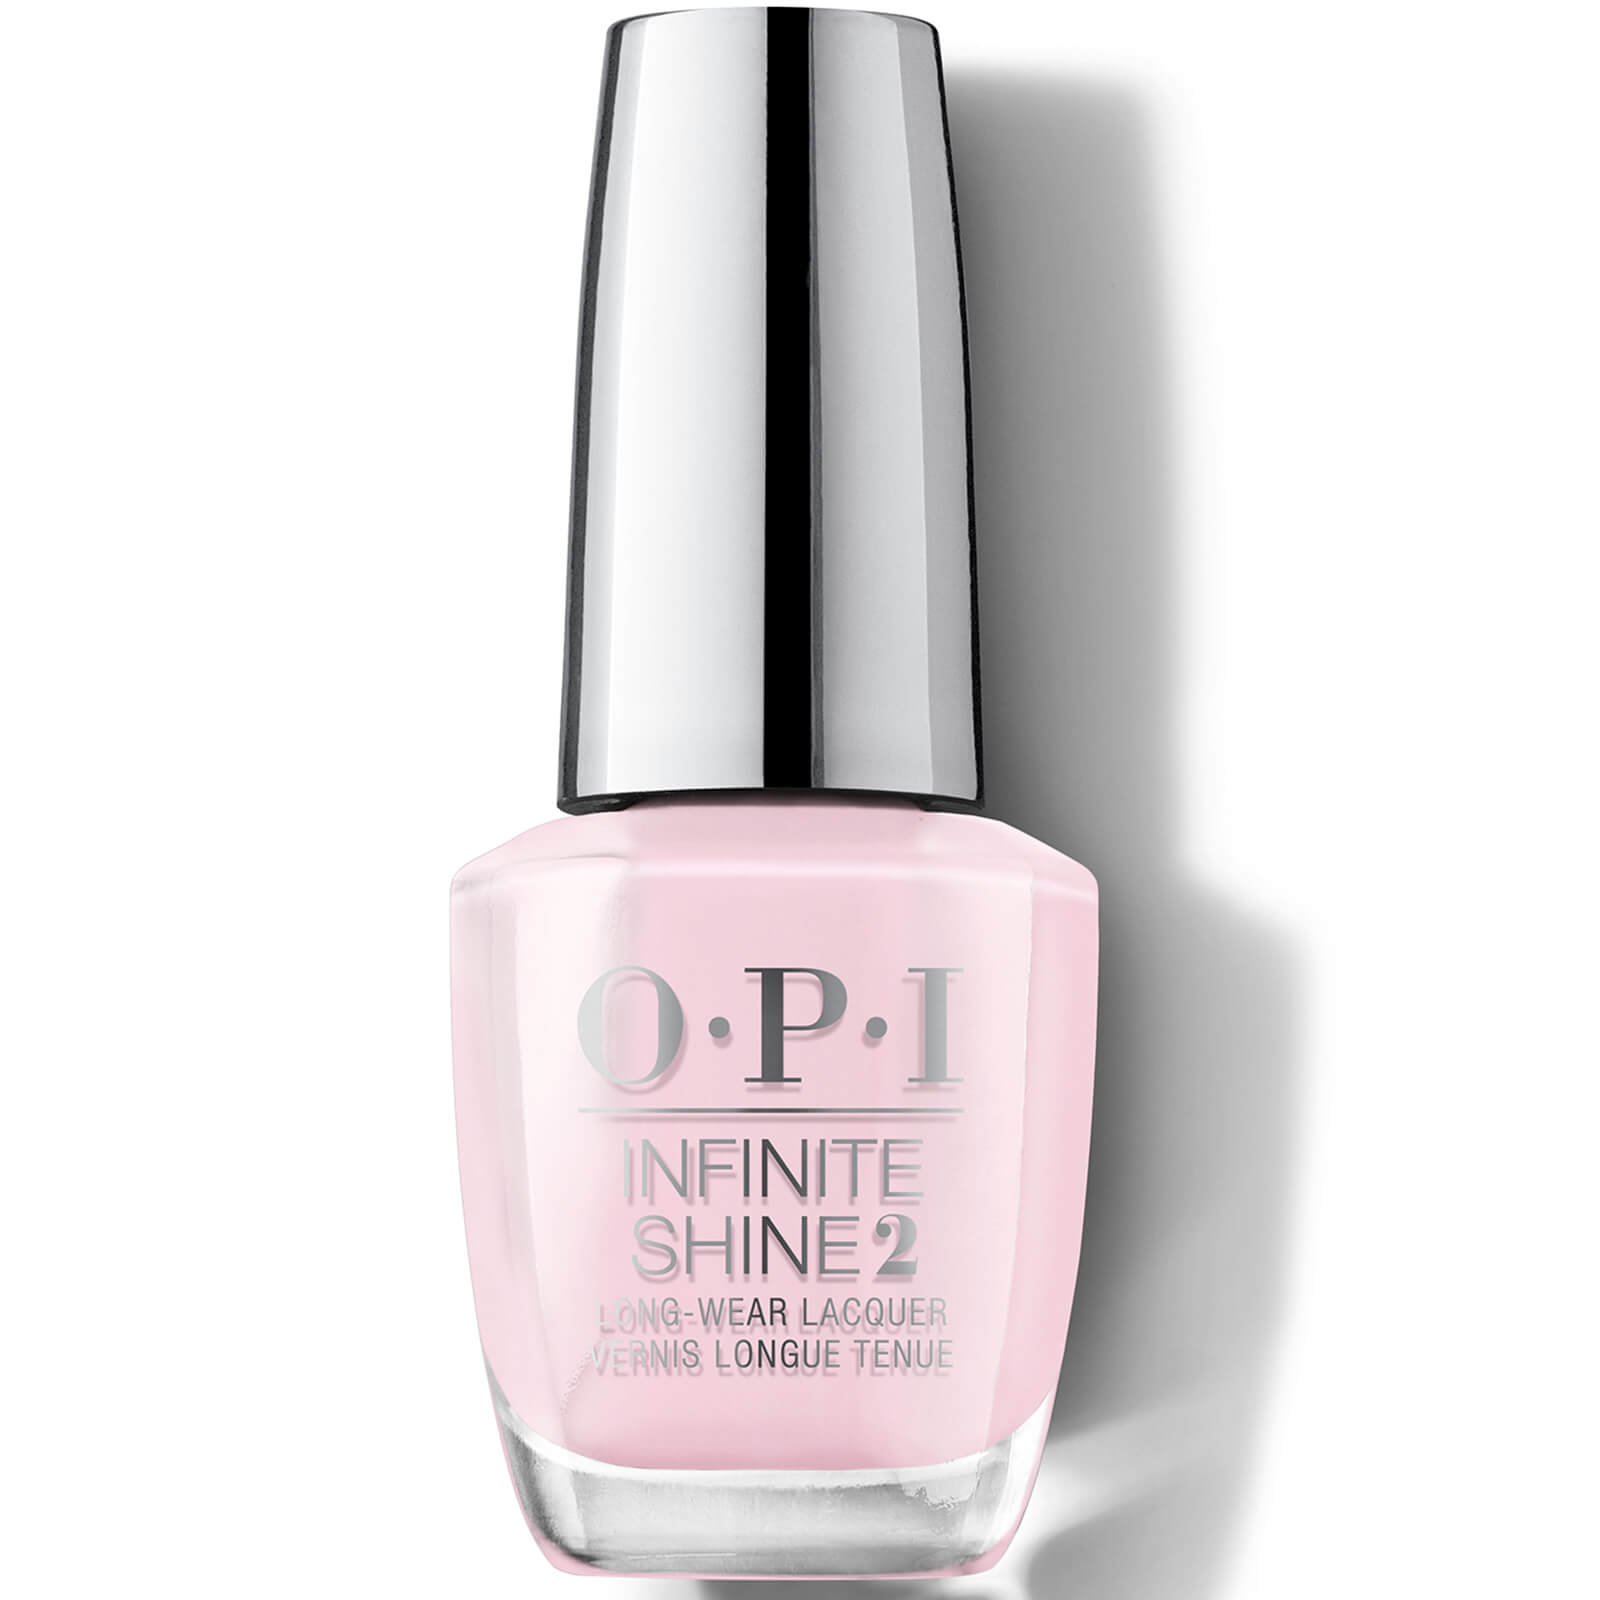 Opi Infinite Shine Long-wear Nail Polish - Mod About You 15ml In Mod About You        